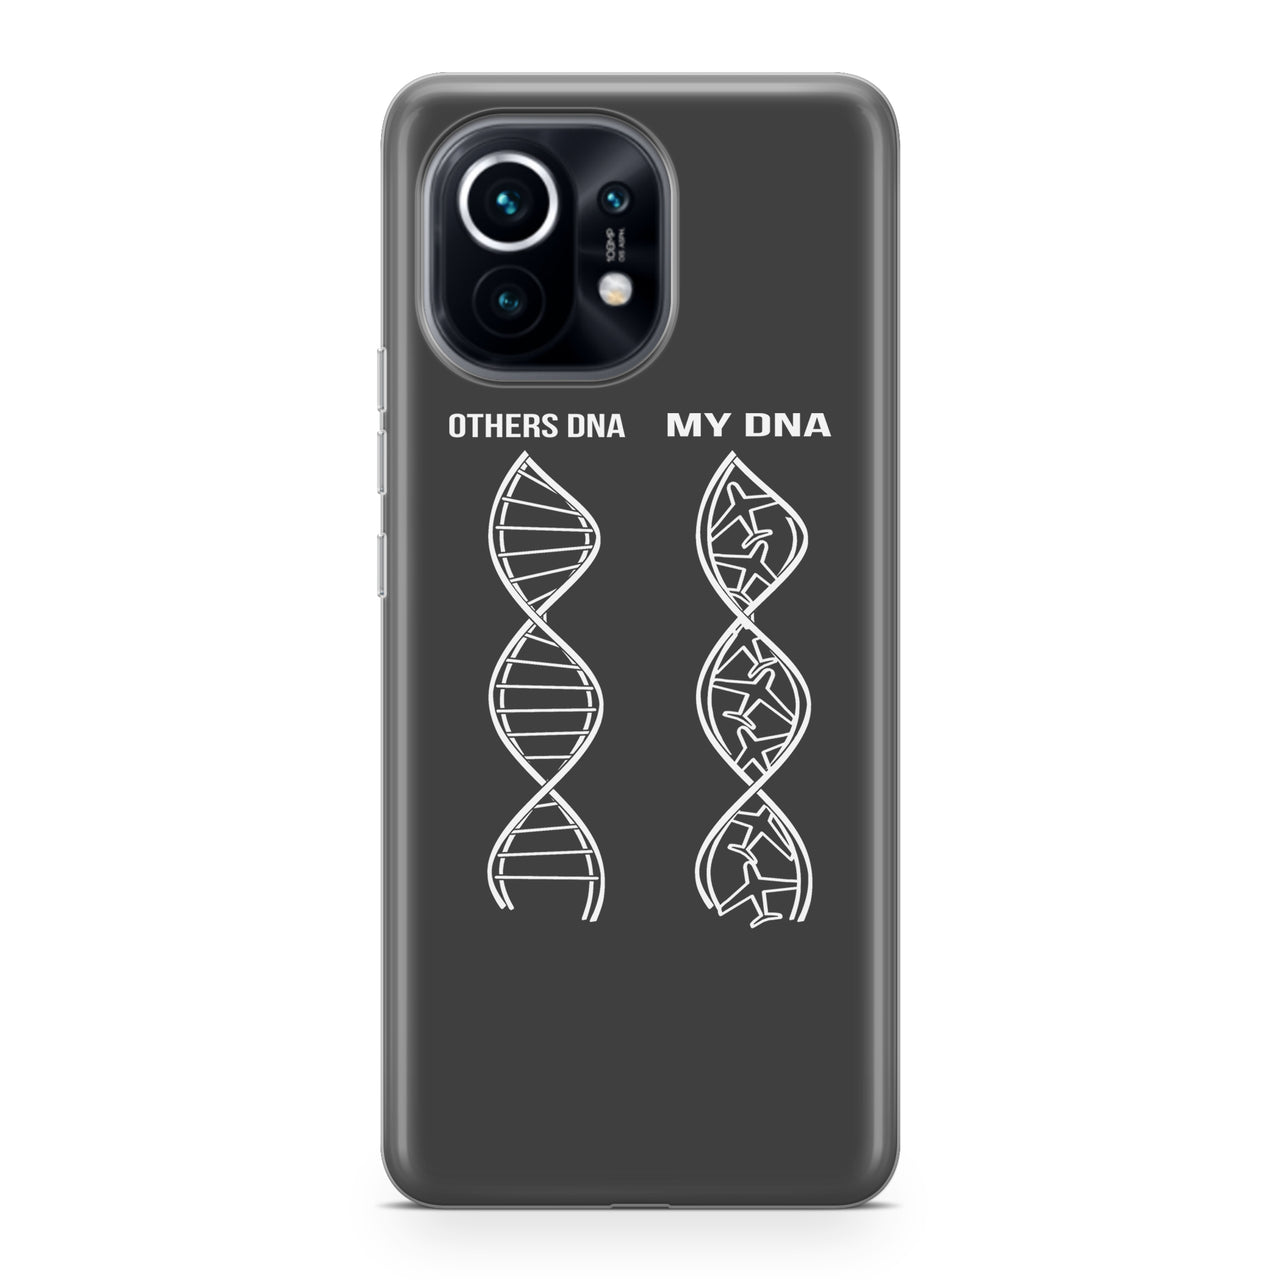 Aviation DNA Designed Xiaomi Cases